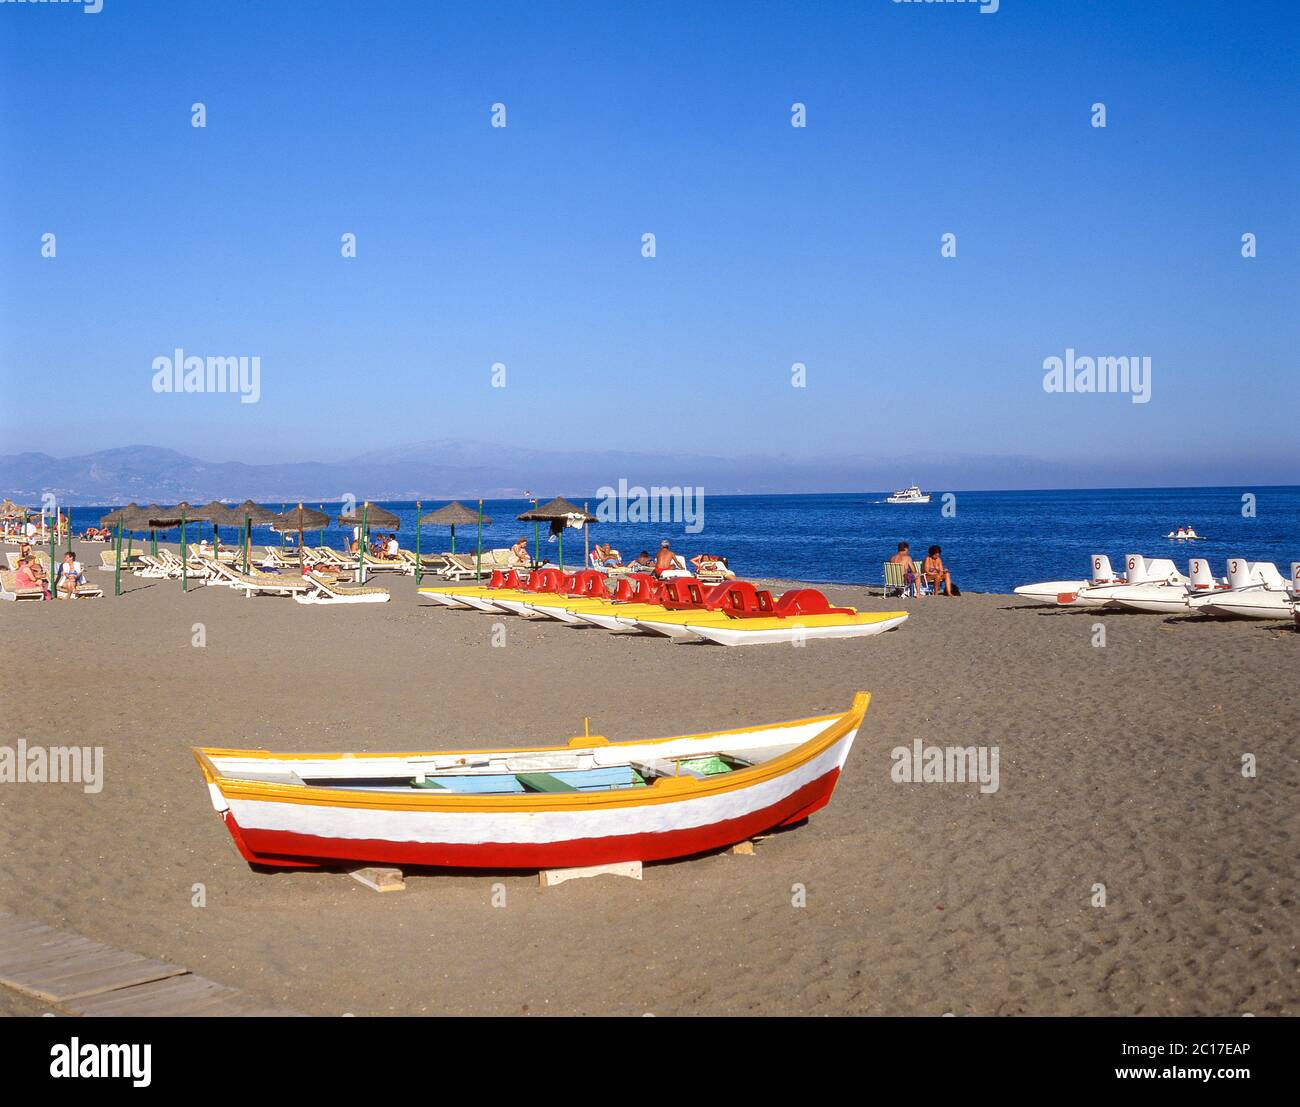 Vue sur la plage, Torremolinos, Costa del sol, Malaga province, Andalousie, Royaume d'Espagne Banque D'Images